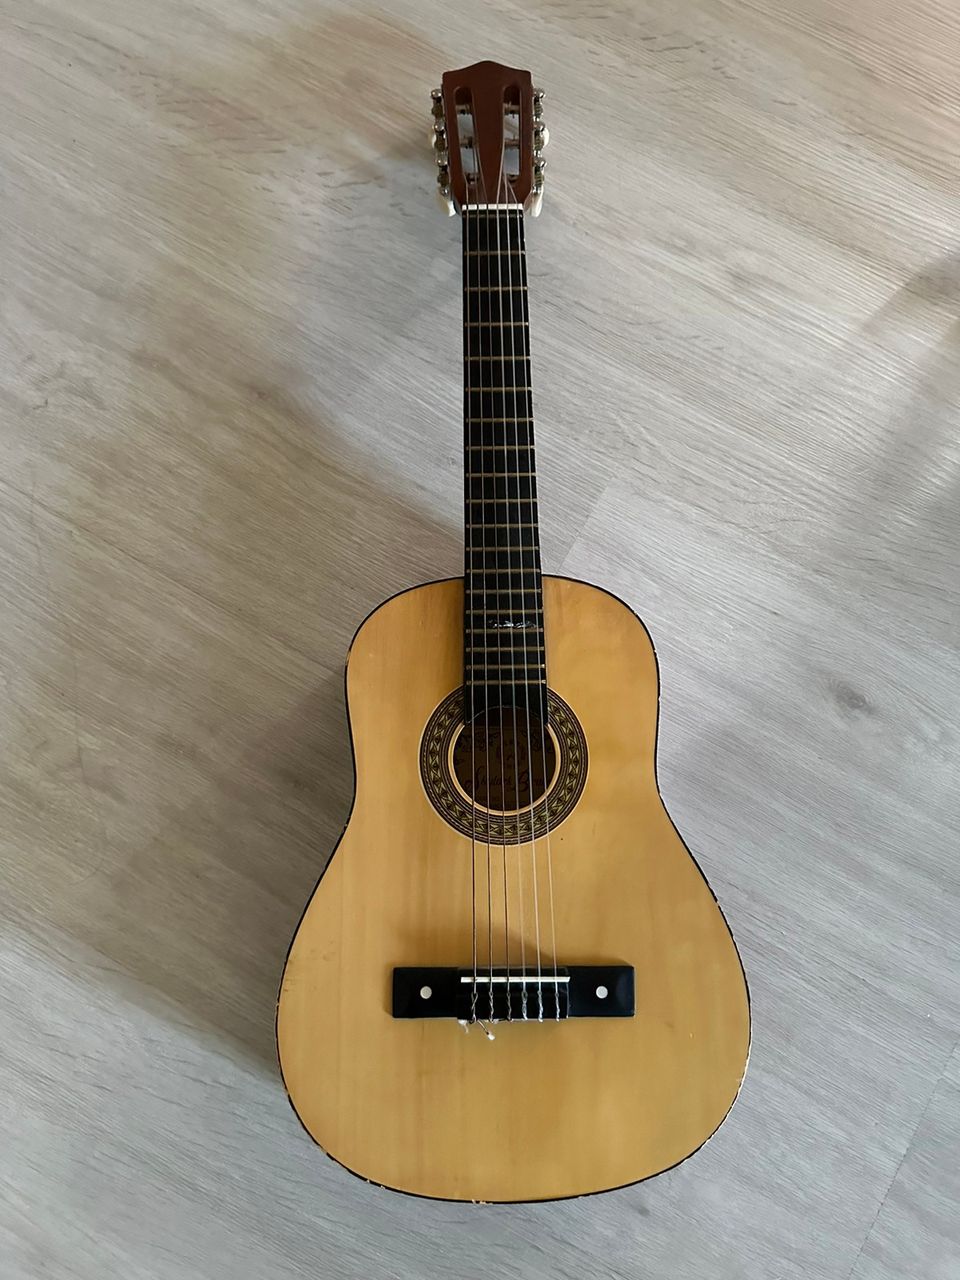 SKYLARK MG-102 Vintage Acoustic Kids/Travel/Mini 1/2 31” Guitar 19” Scale